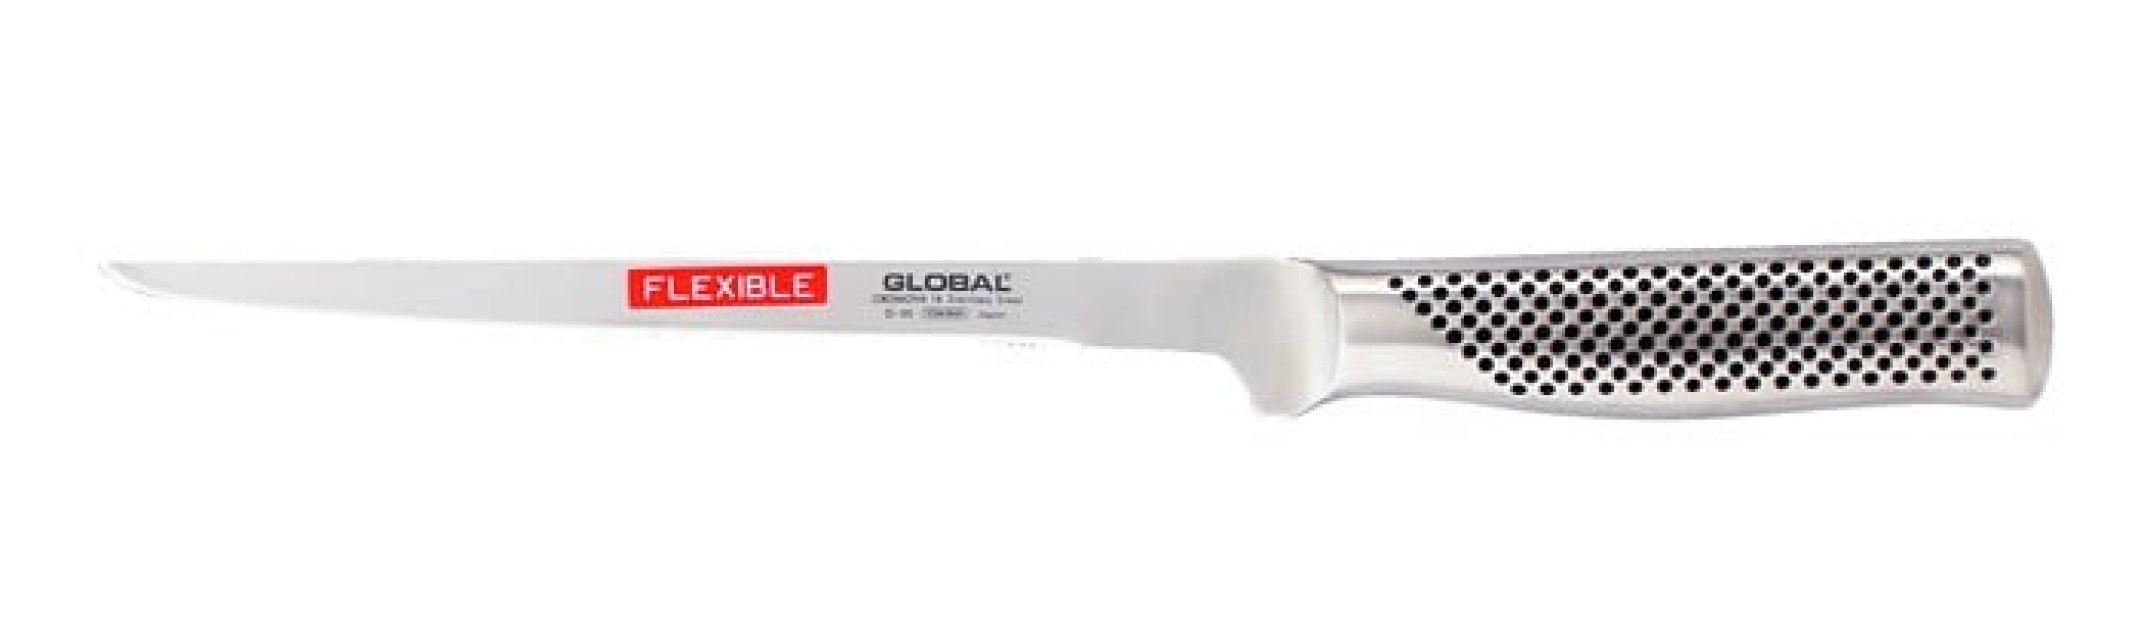 Filékniv G-30, 21cm, flexibel - Global